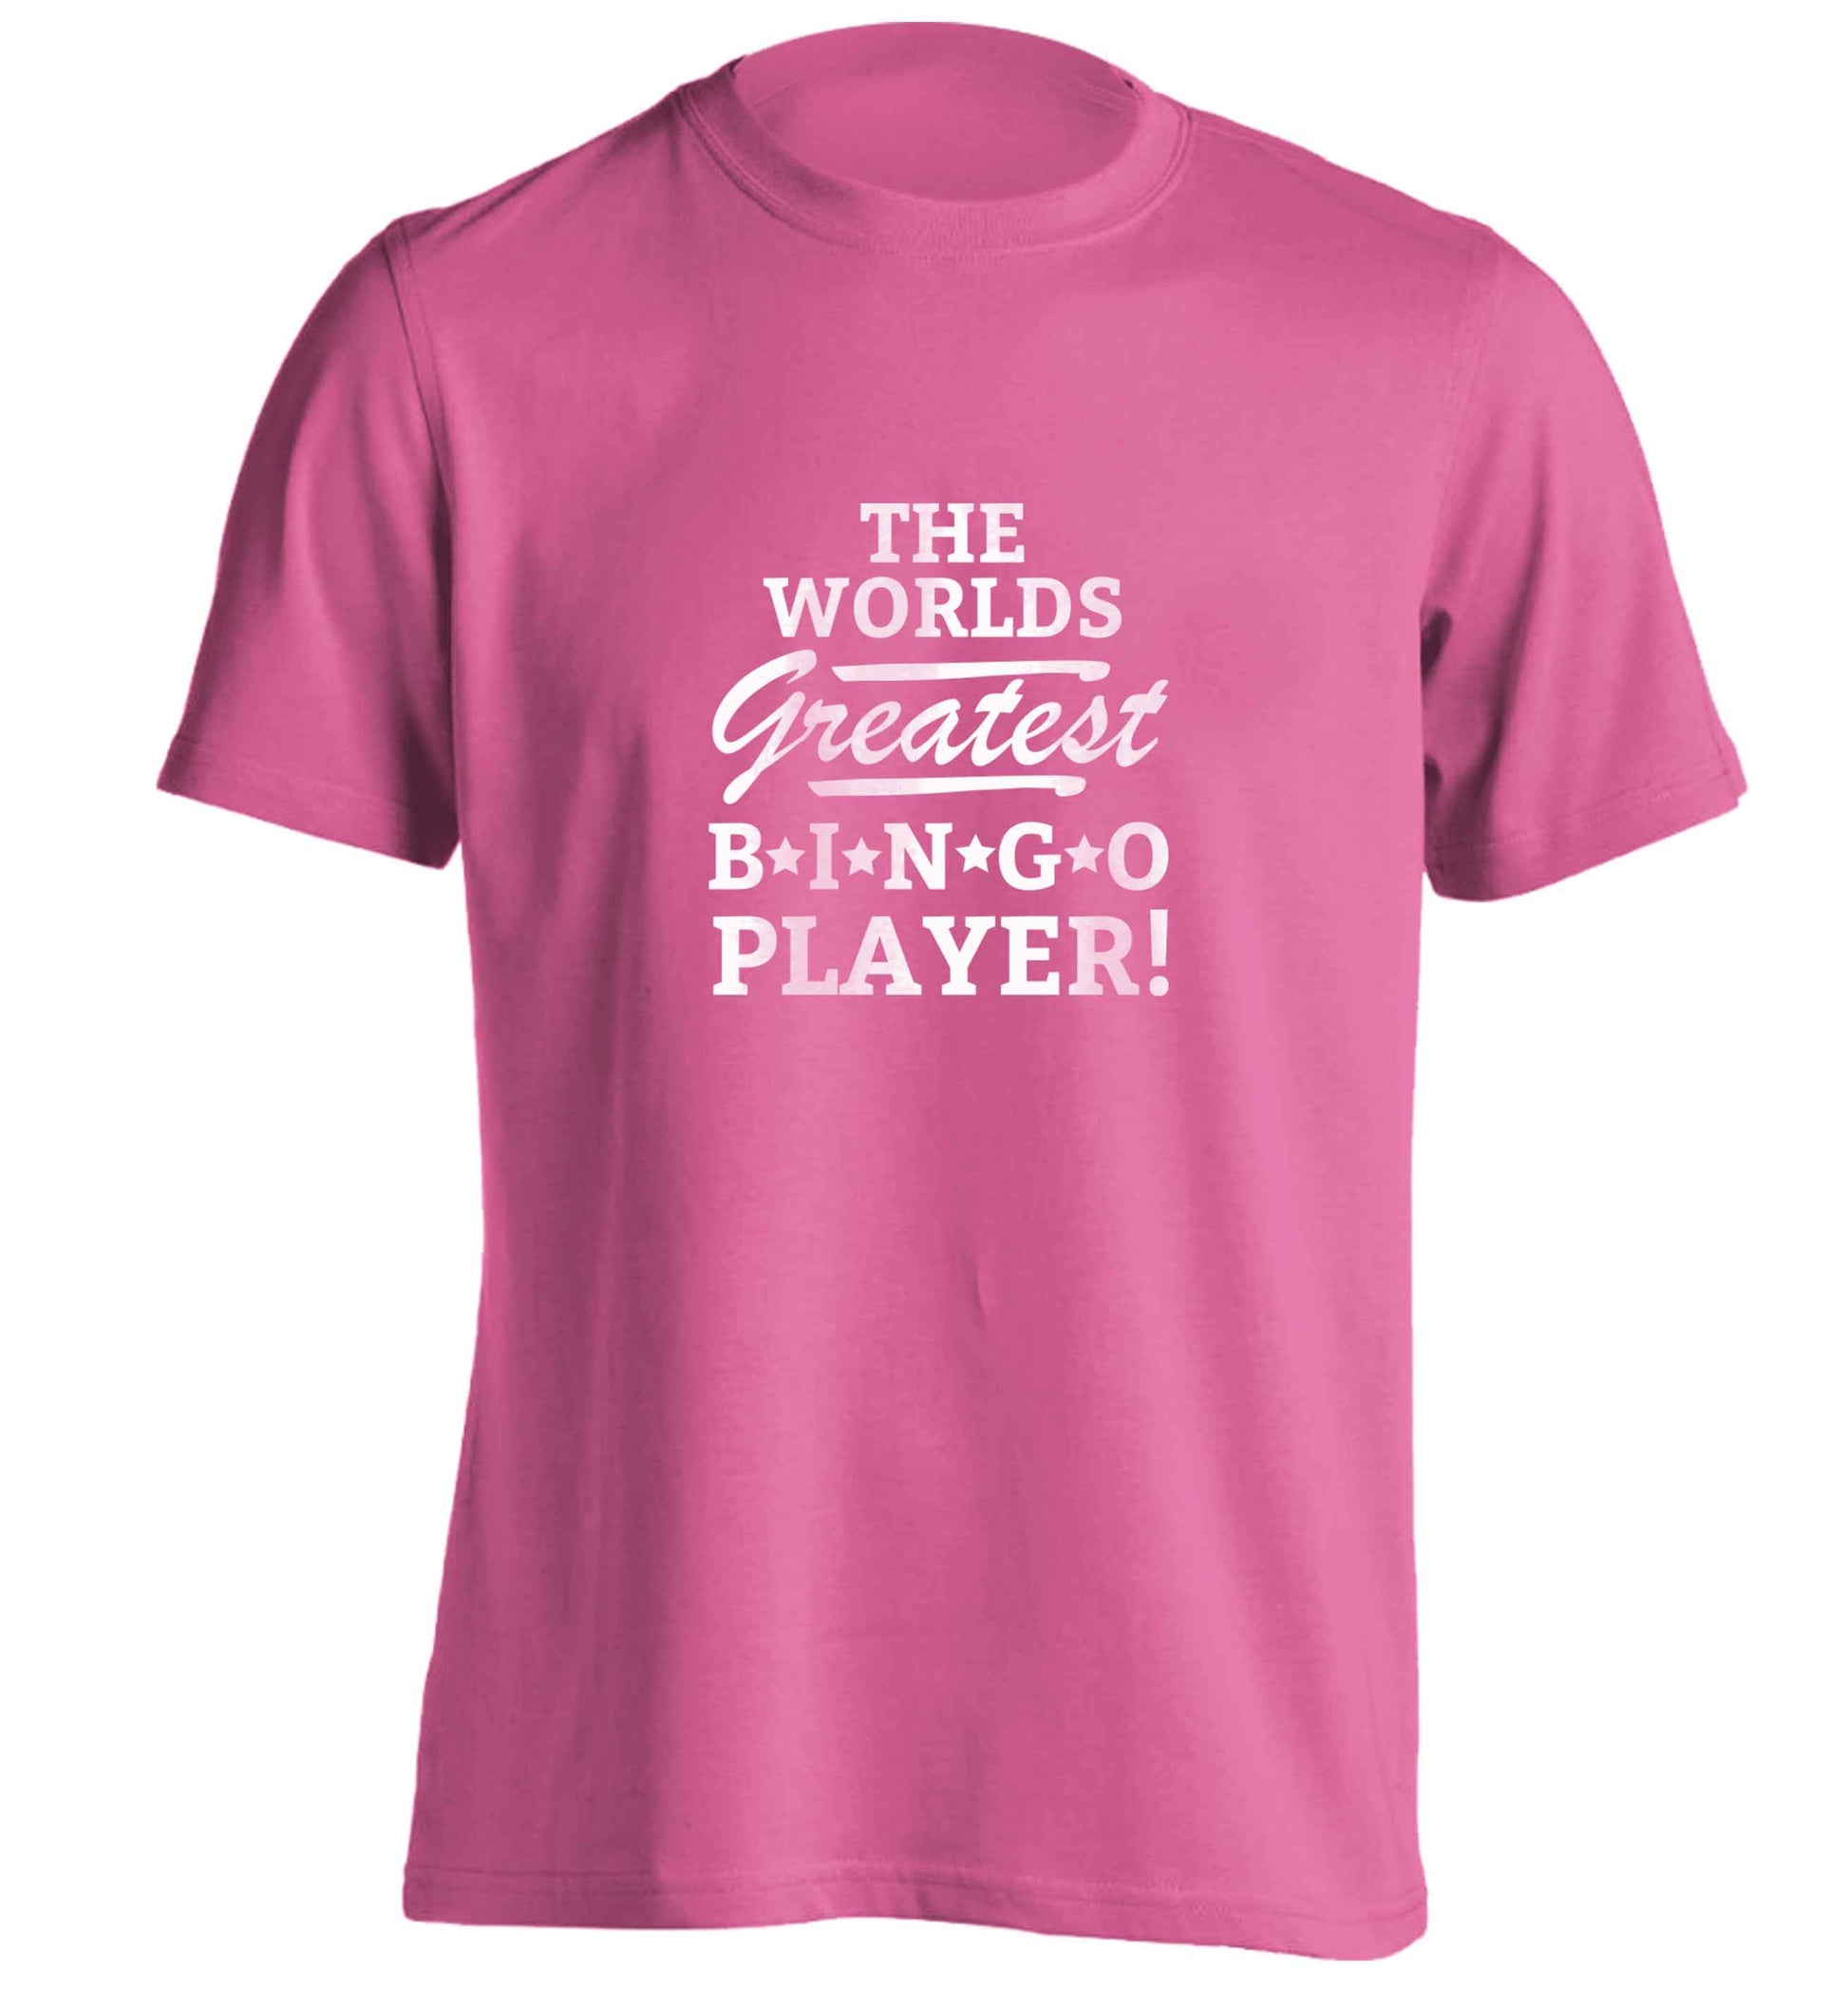 Worlds greatest bingo player adults unisex pink Tshirt 2XL